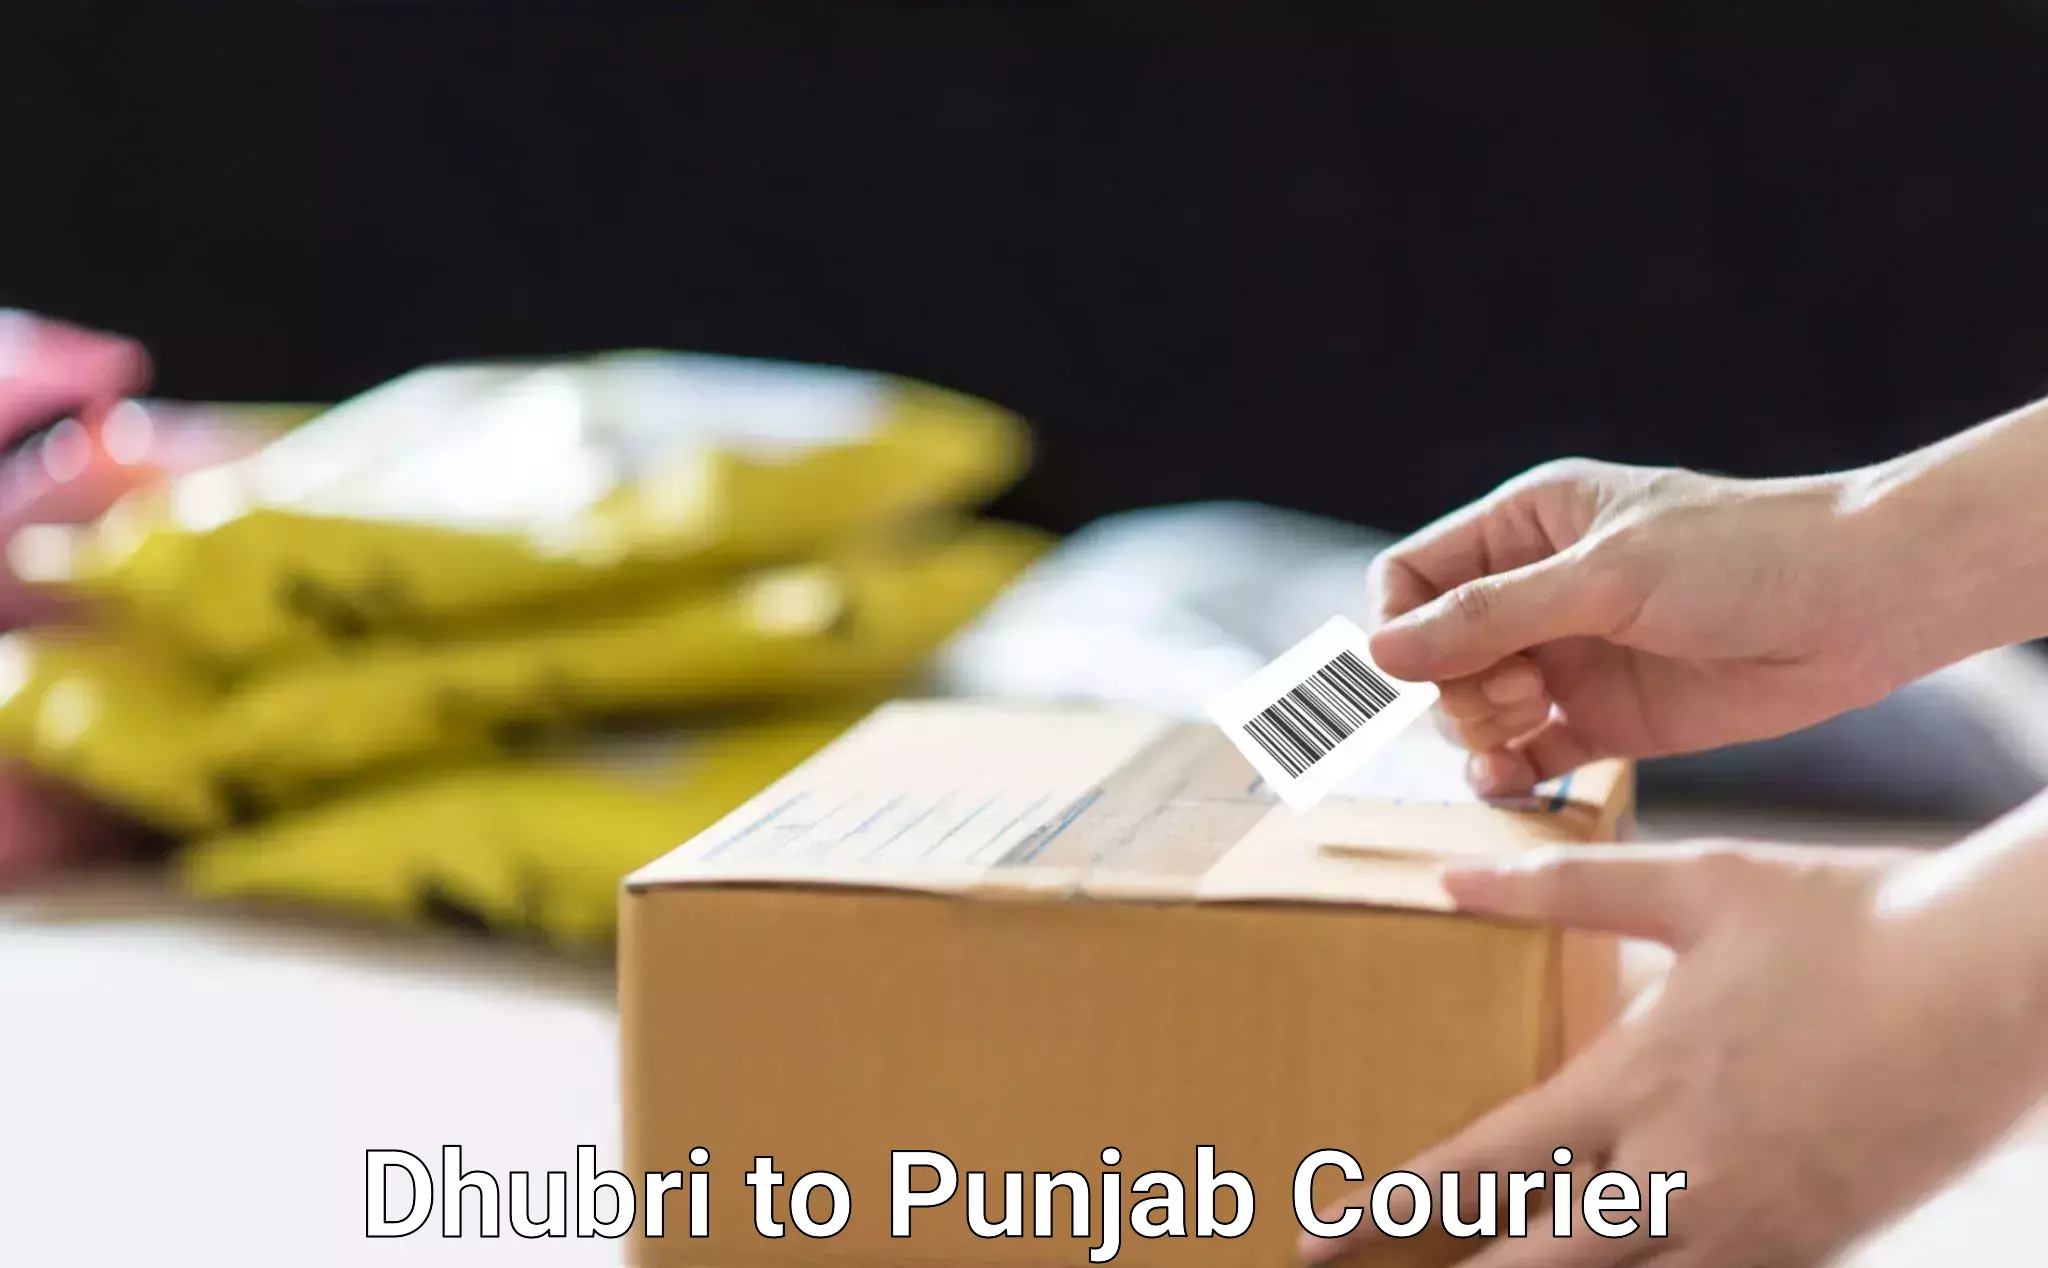 Courier service comparison Dhubri to Mehta Chowk